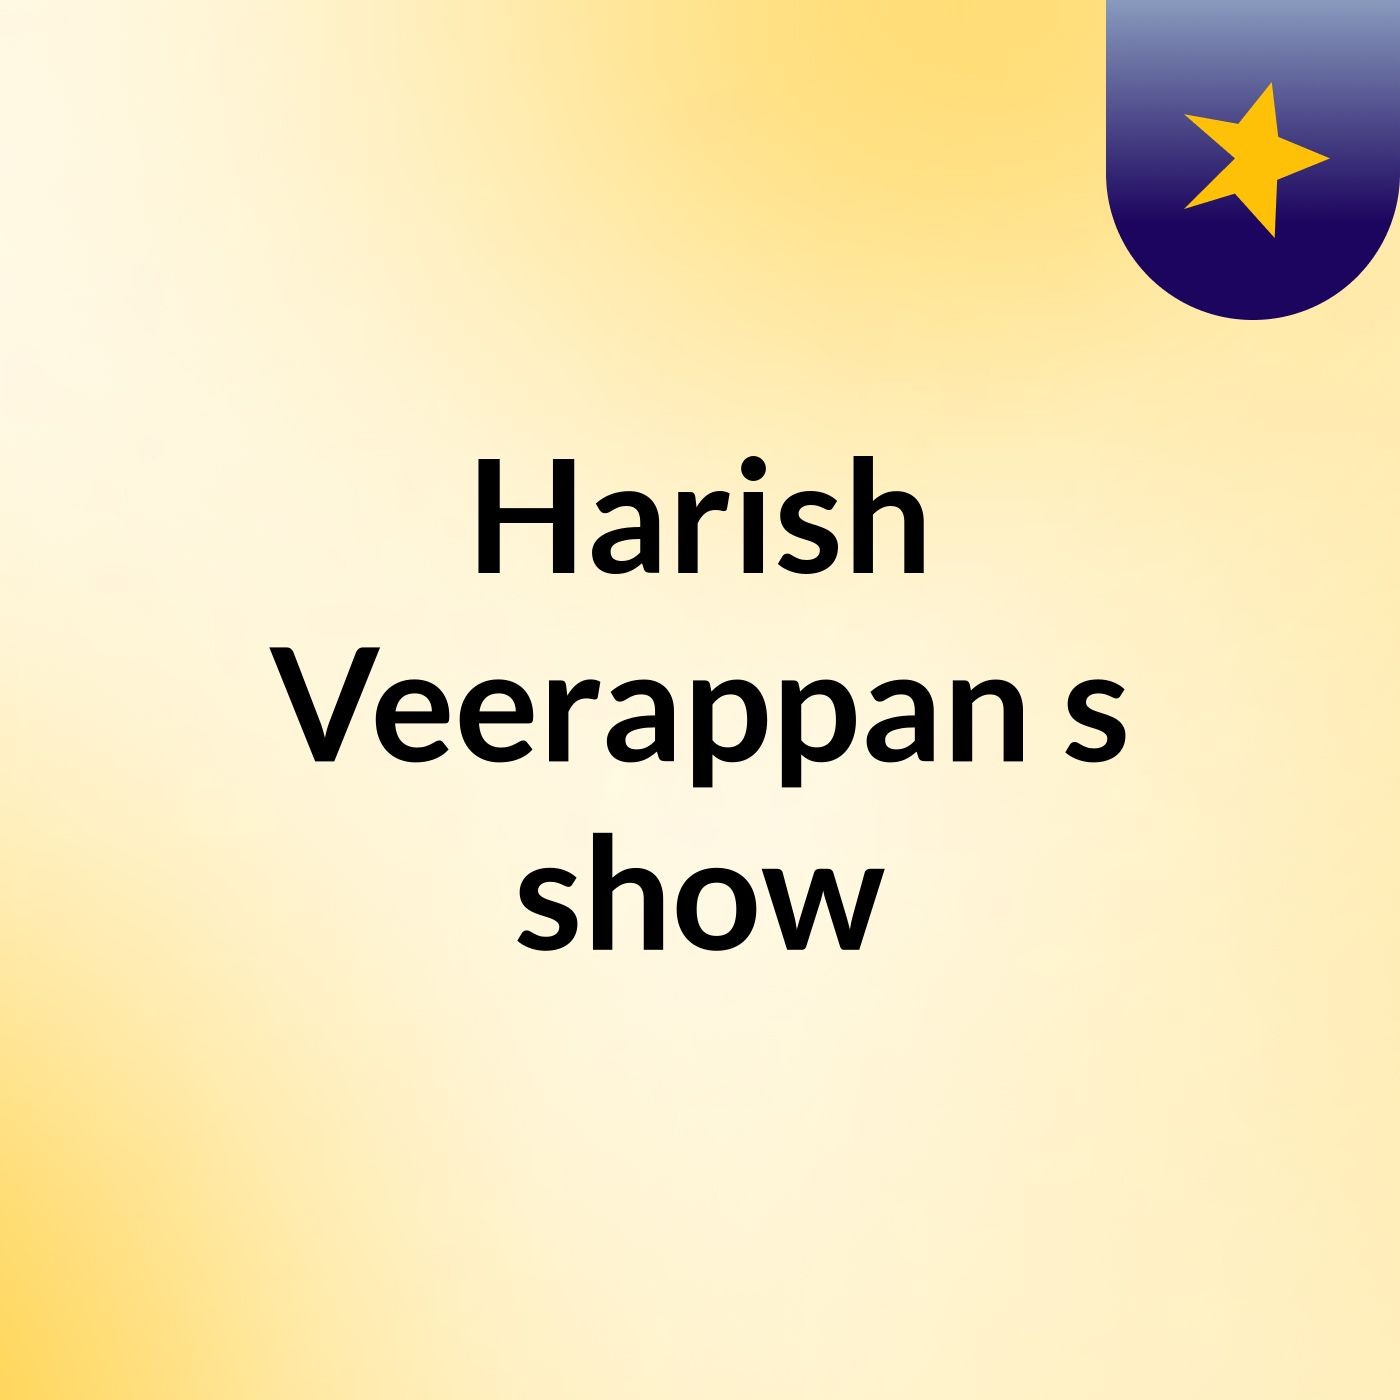 Harish Veerappan's show